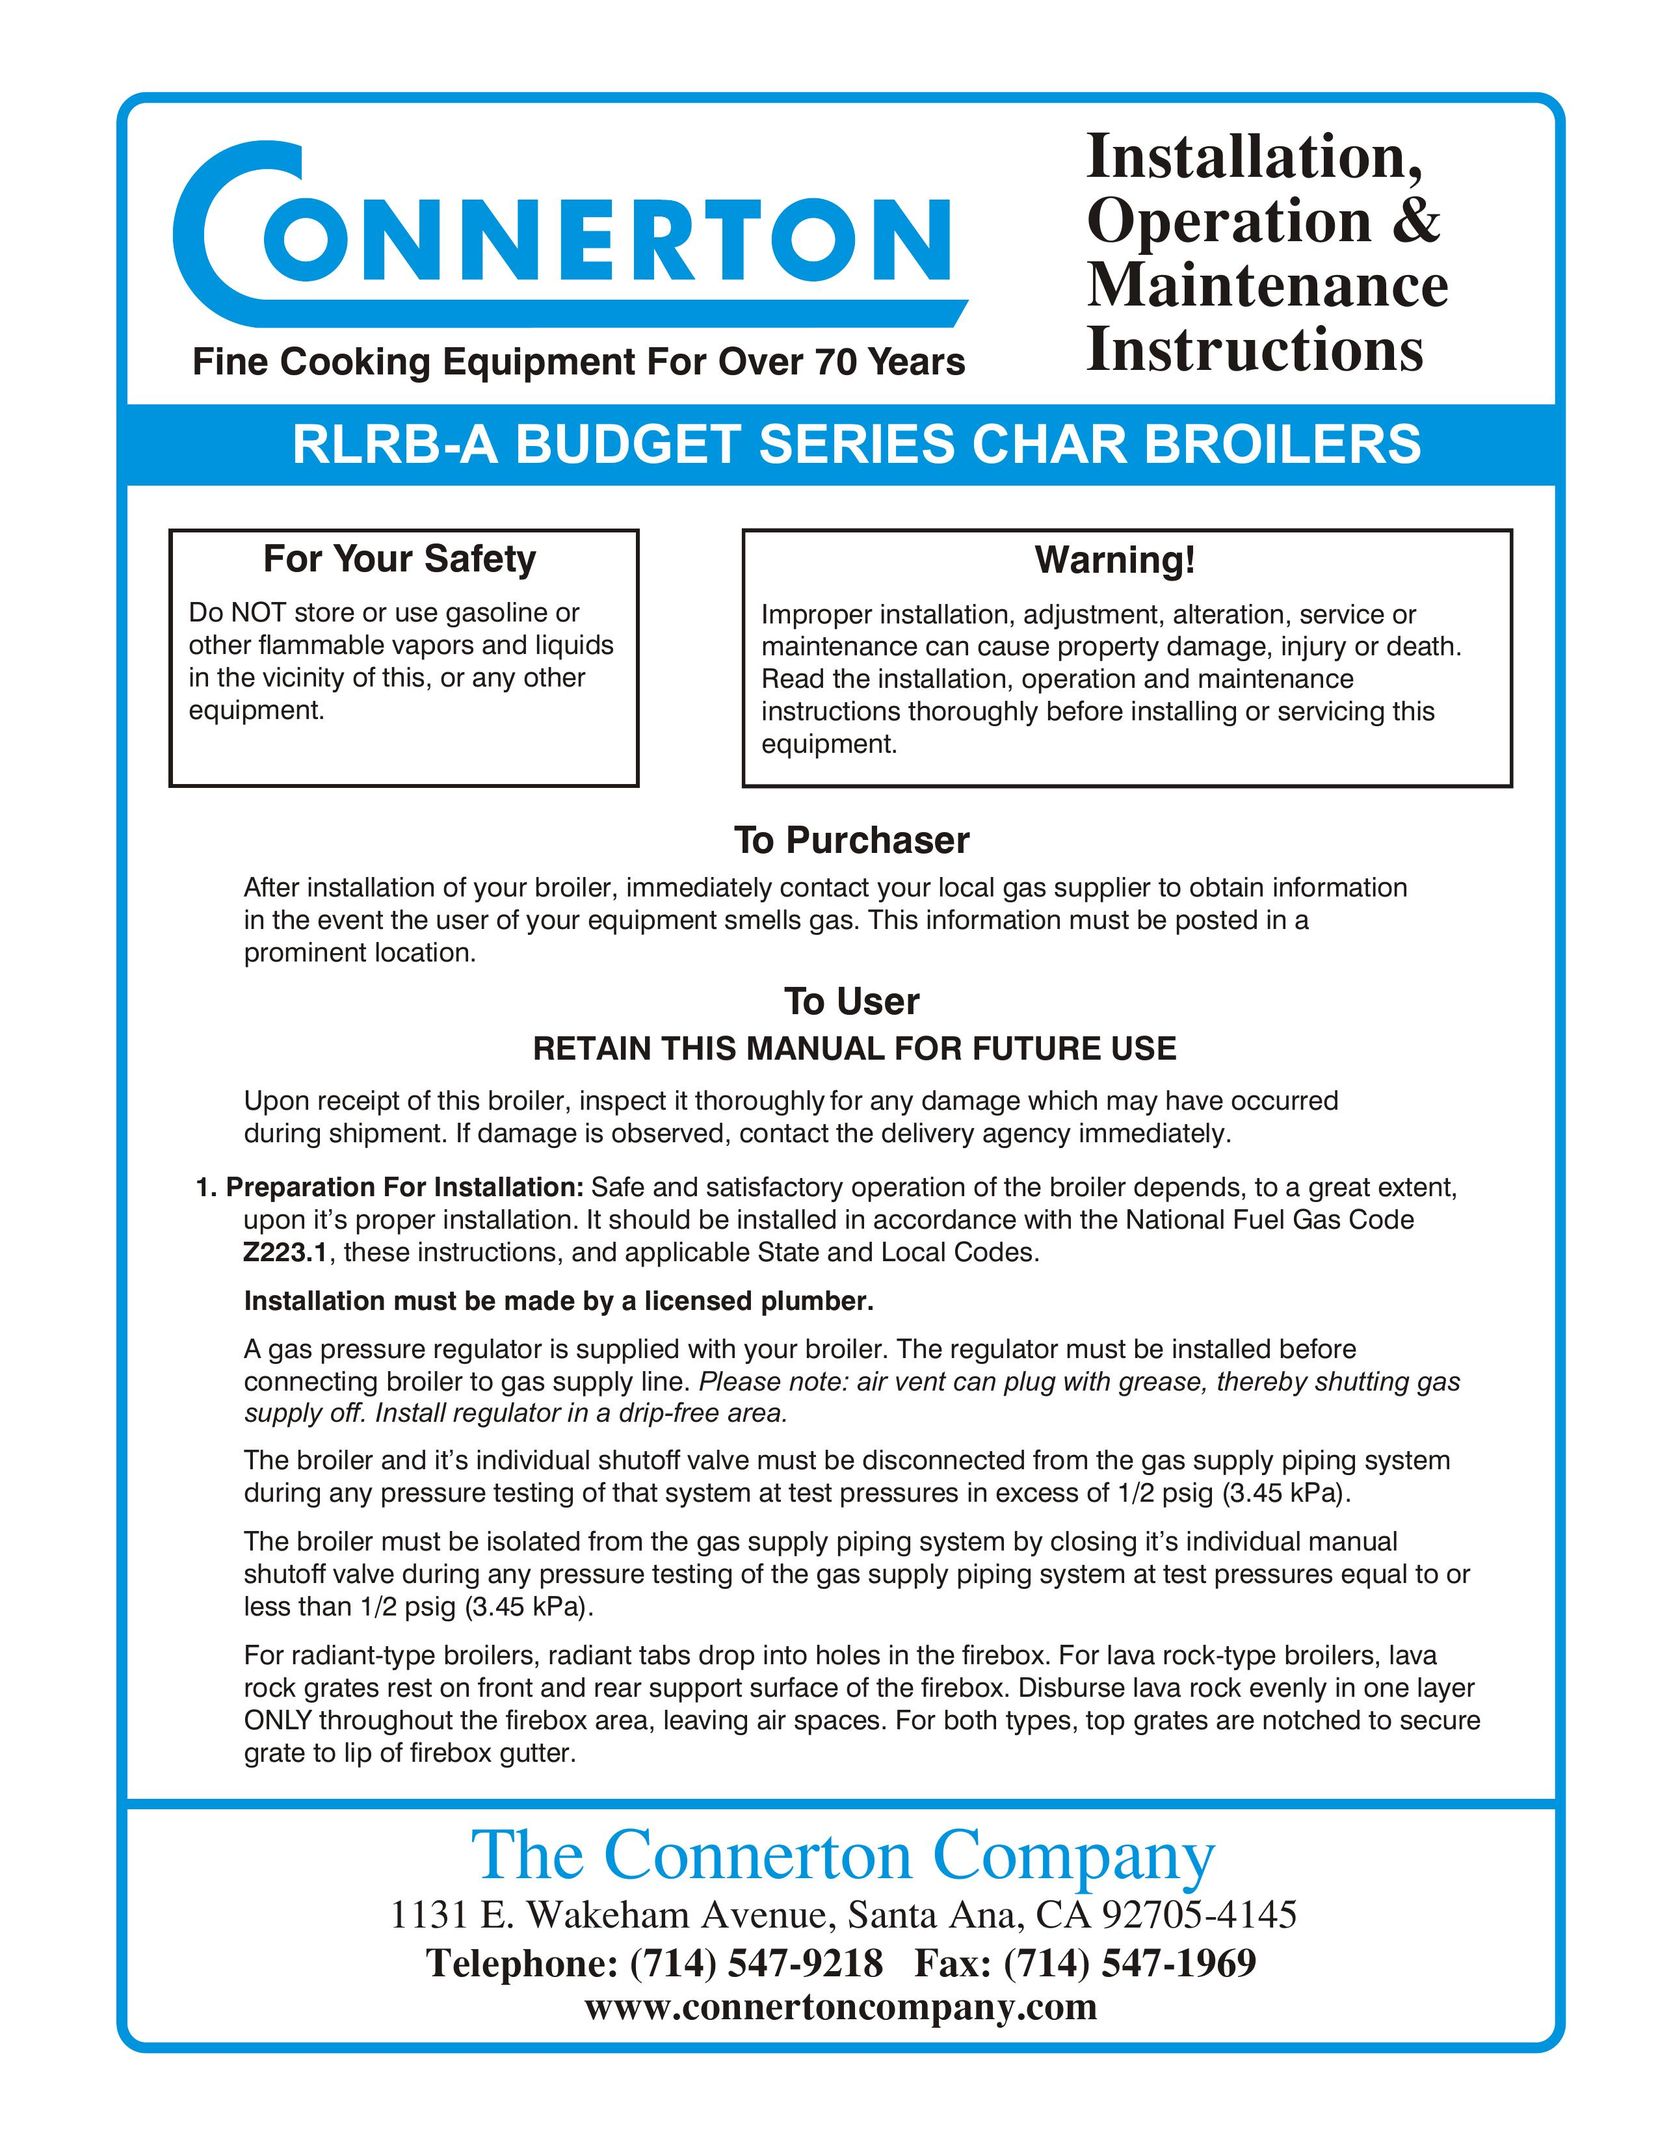 Connerton Co RLRB-A Oven User Manual